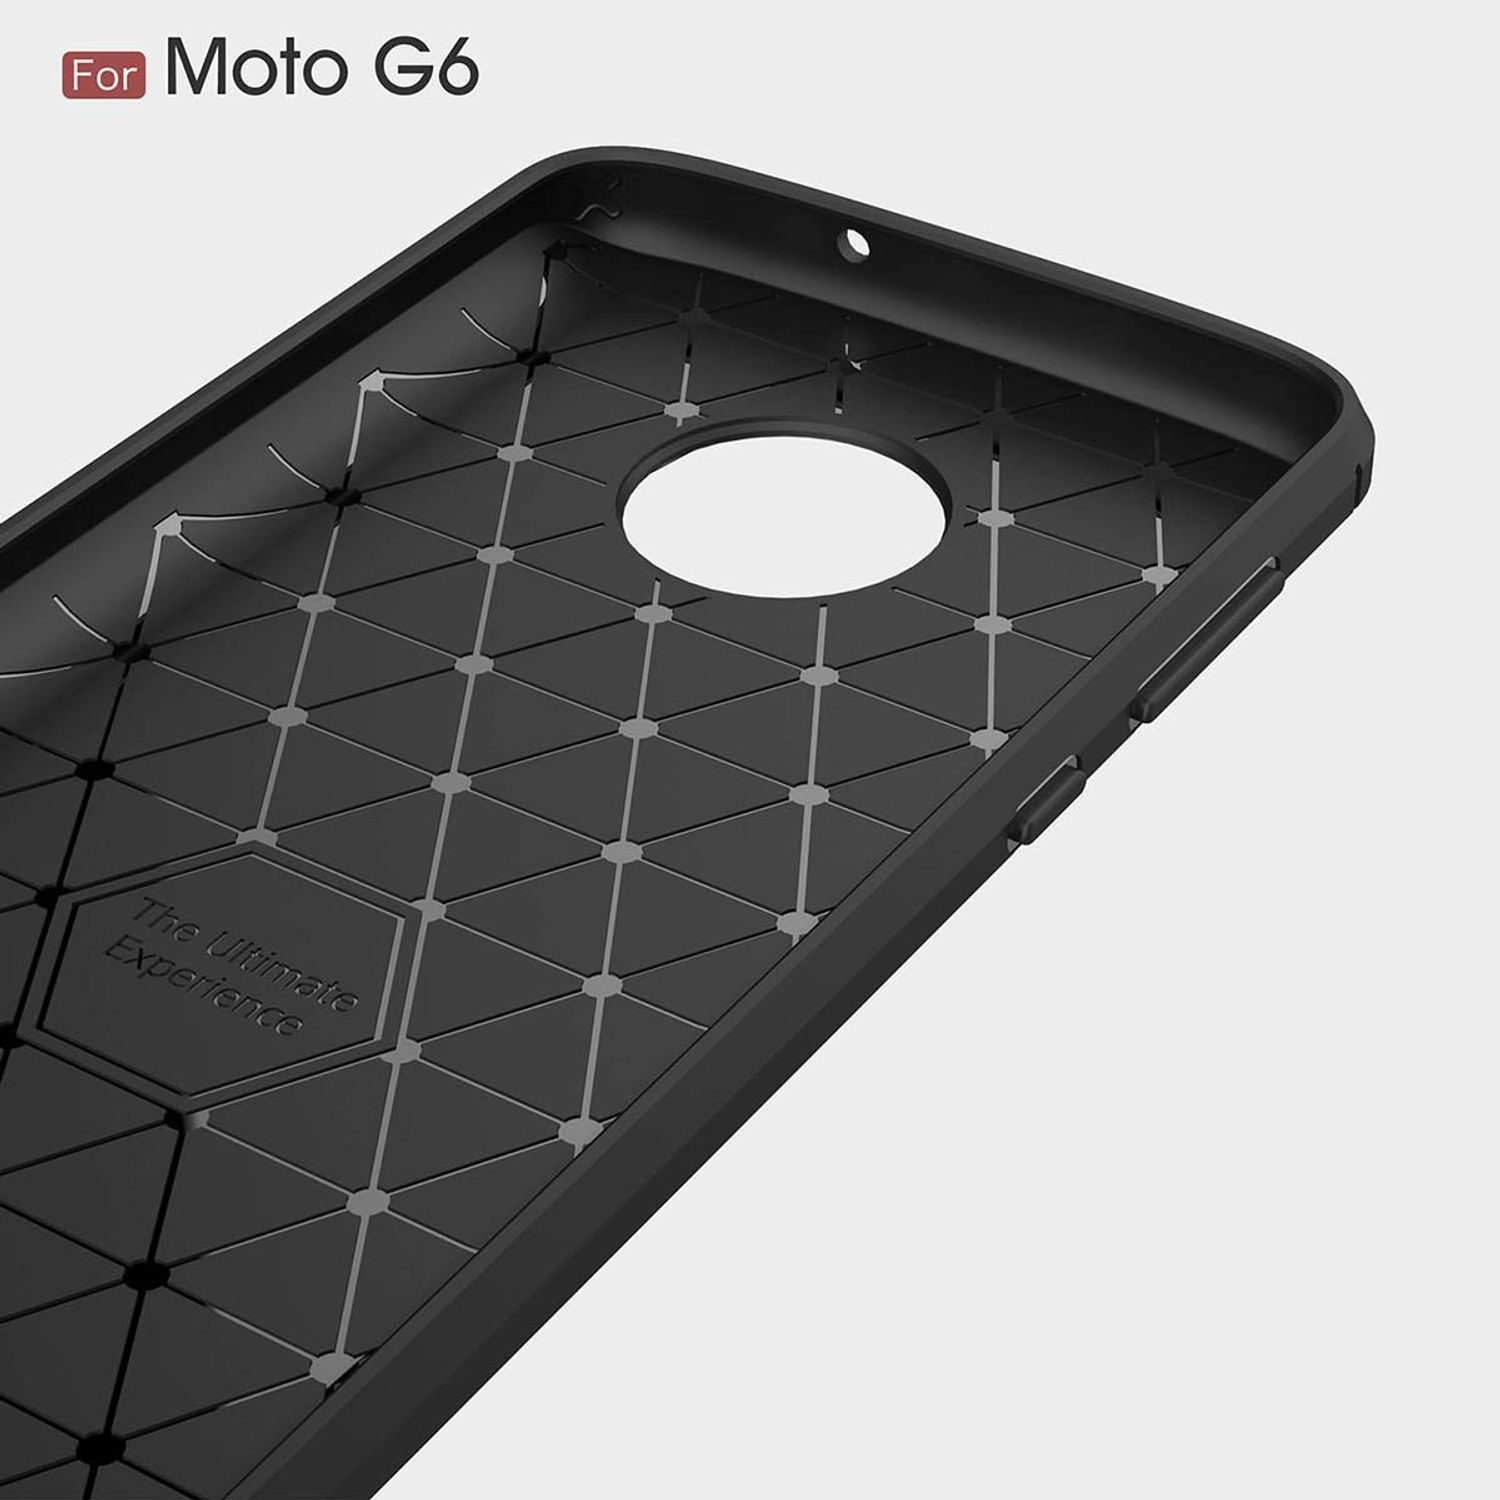 DESIGN Backcover, KÖNIG Motorola, Schutzhülle, Schwarz G6, Moto